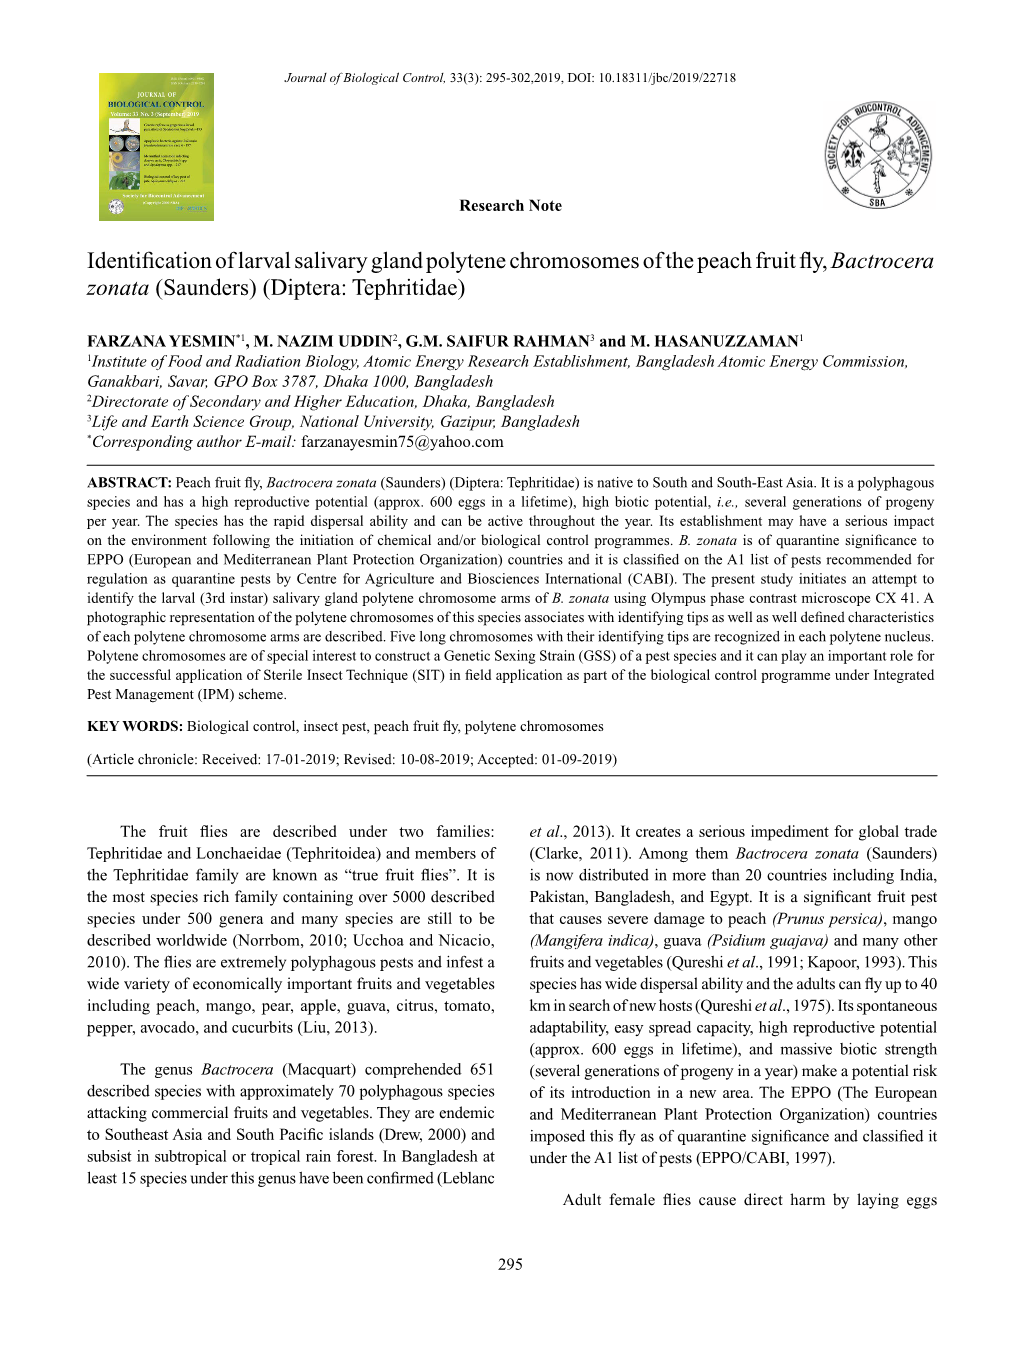 Identification of Larval Salivary Gland Polytene Chromosomes of the Peach Fruit Fly, Bactrocera Zonata (Saunders) (Diptera: Tephritidae)